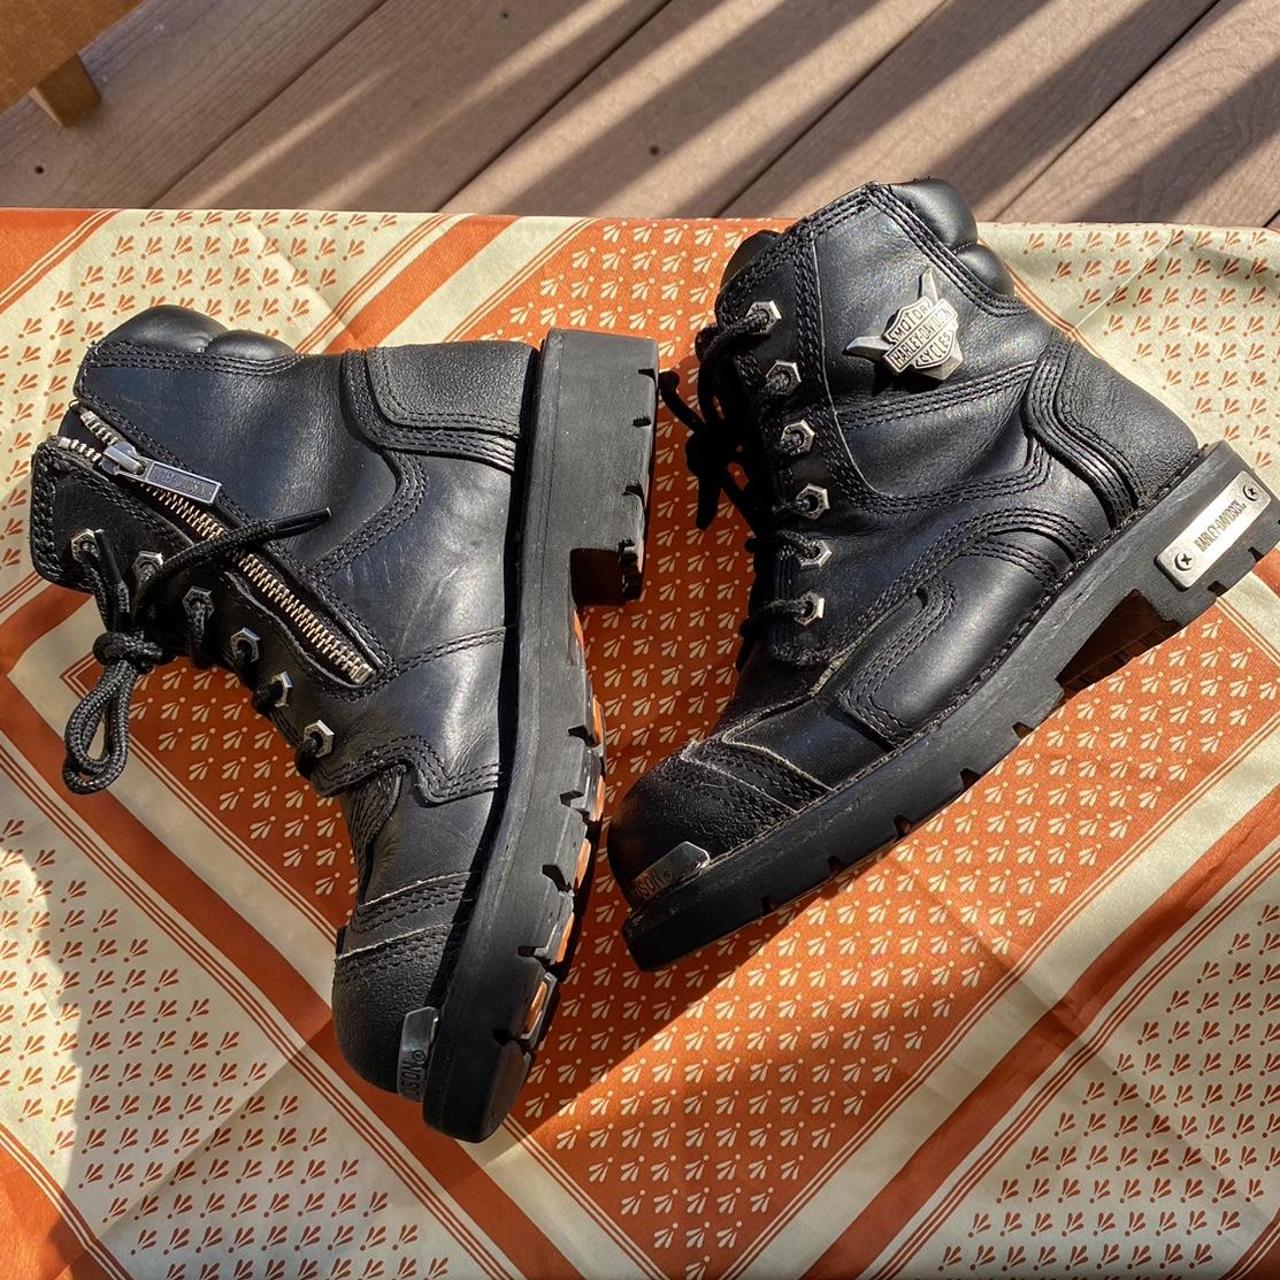 Harley Davidson Boots 
- black leather Harley boots...